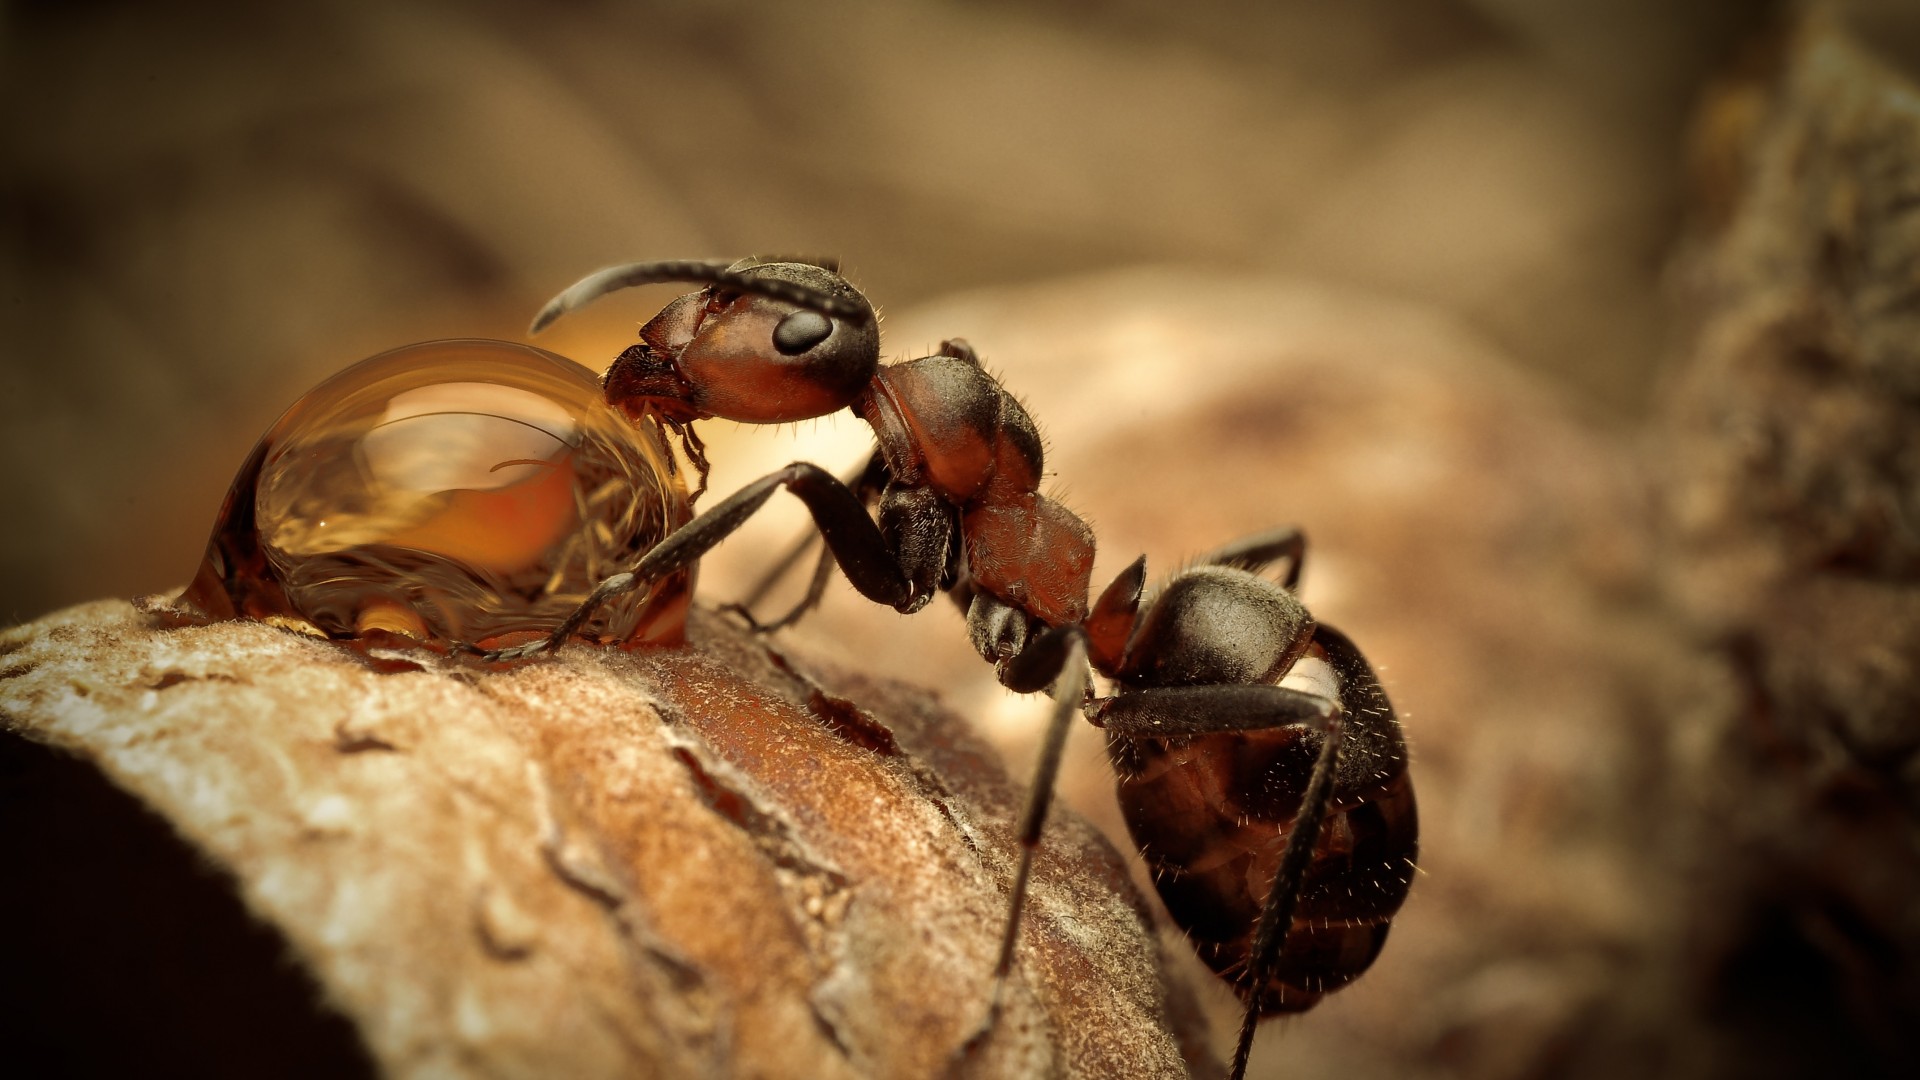 муравей, насекомые, макро, коричневый, пьет воду, Ants, insects, water drops, macro, brown, Drinking, Water (horizontal)